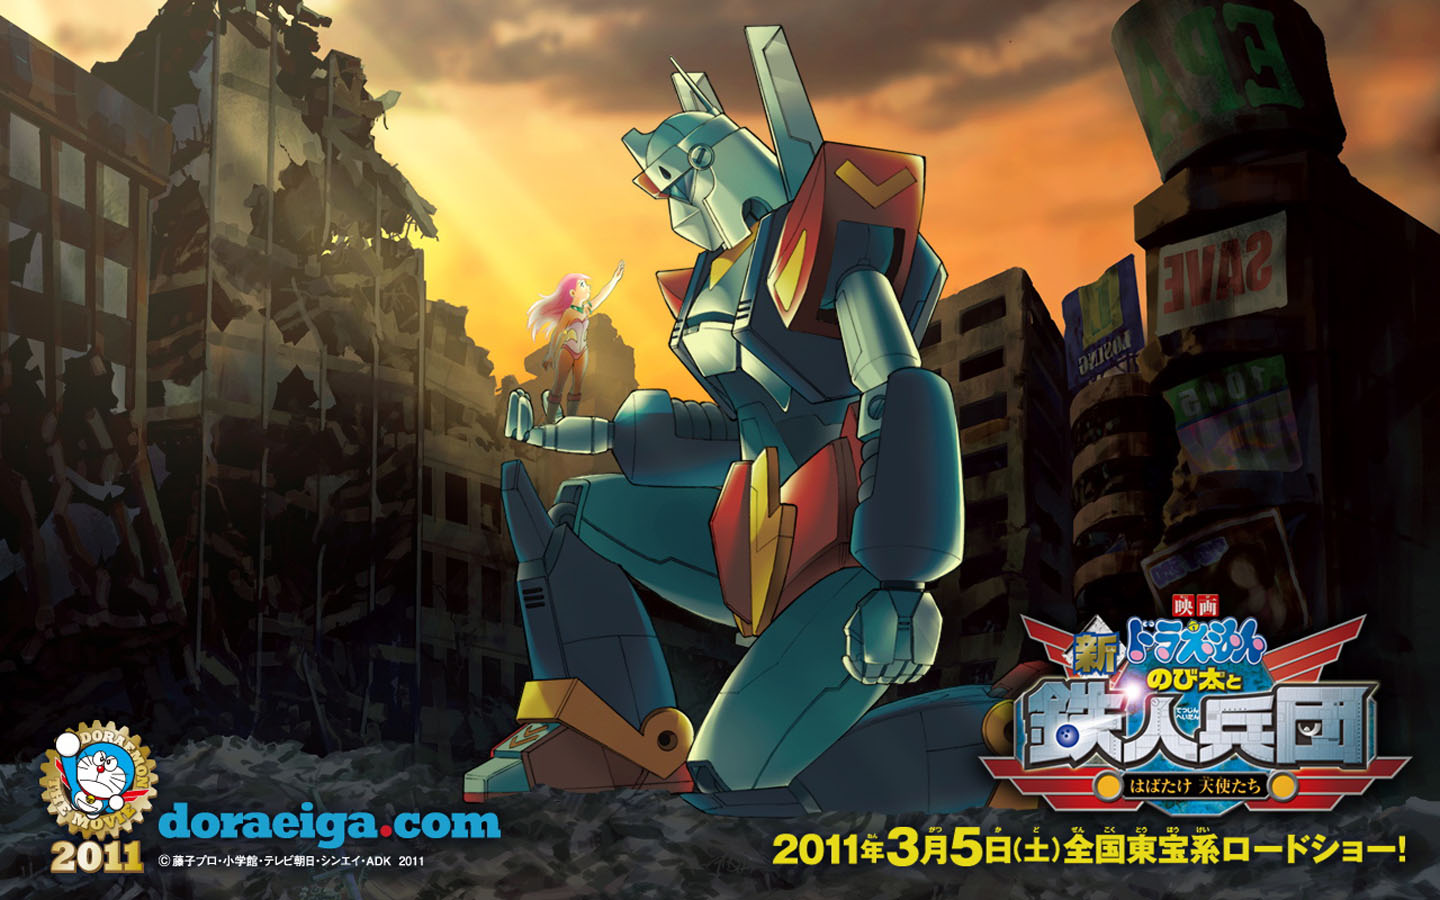 New Iron Man Corps 2011 Doraemon wallpaper